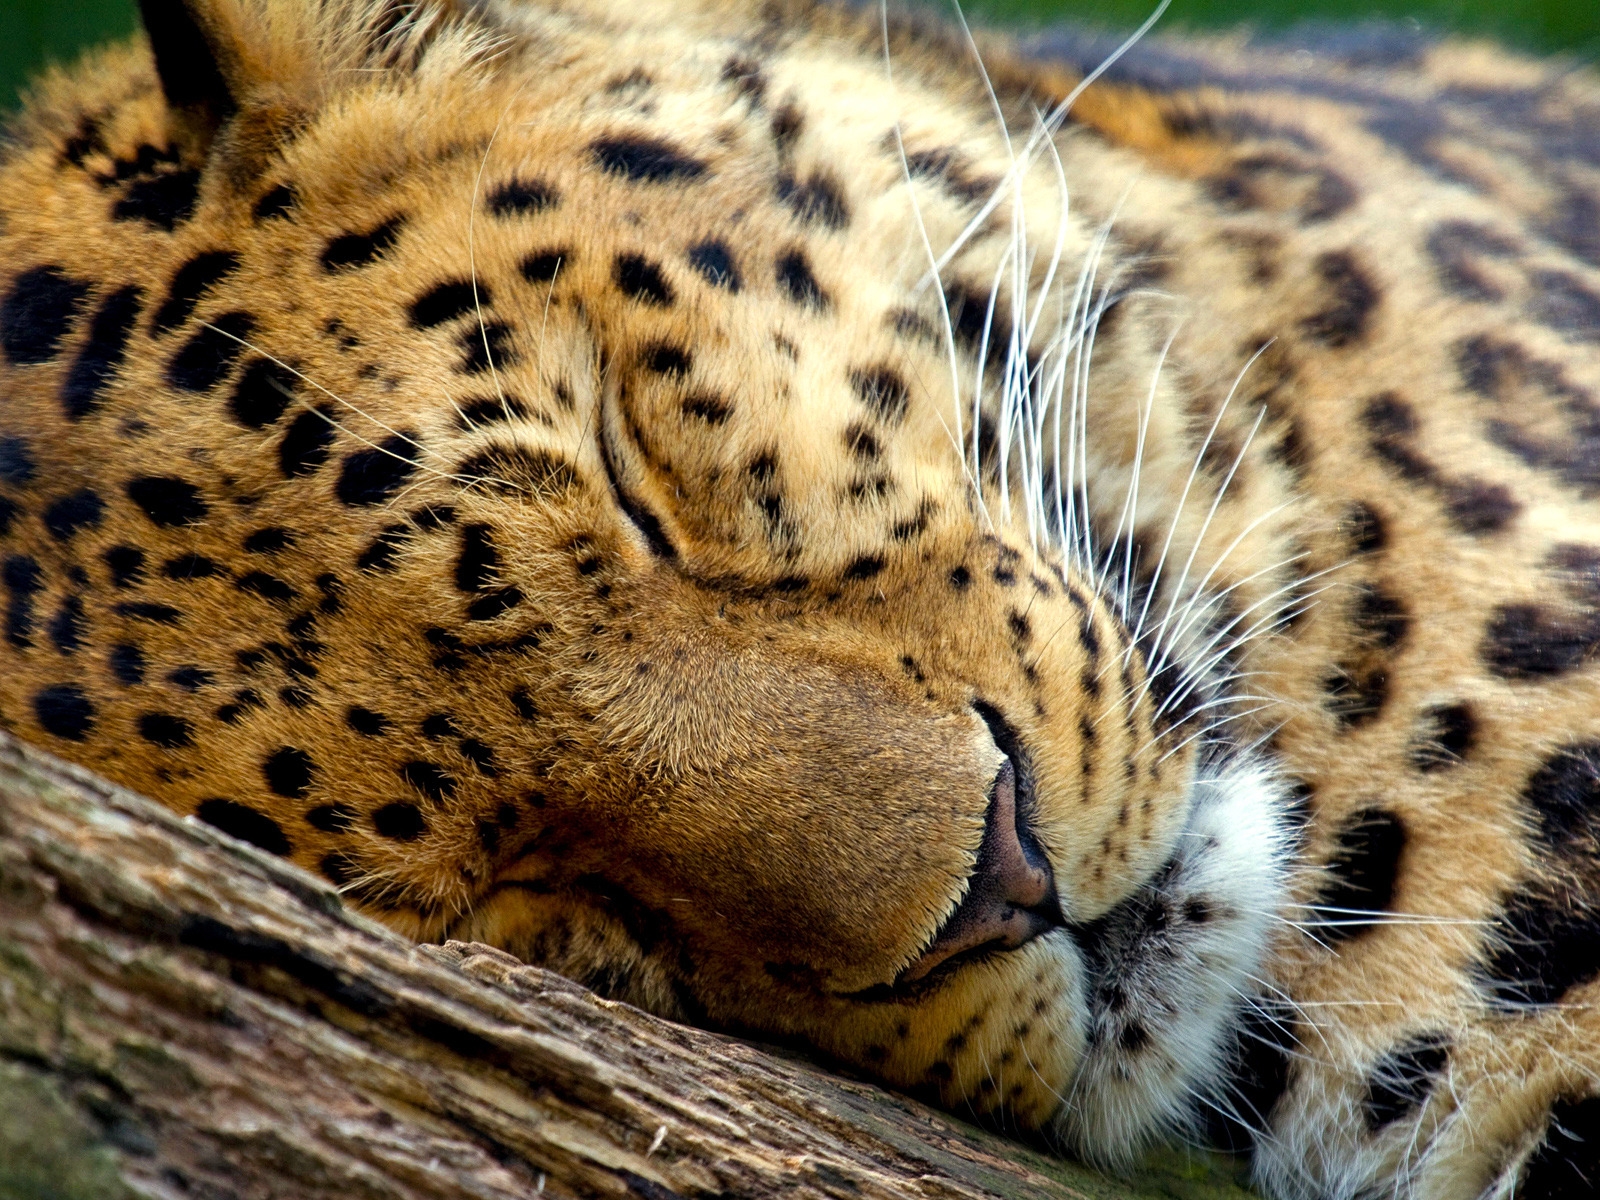 Cute Leopard Sleeping for 1600 x 1200 resolution